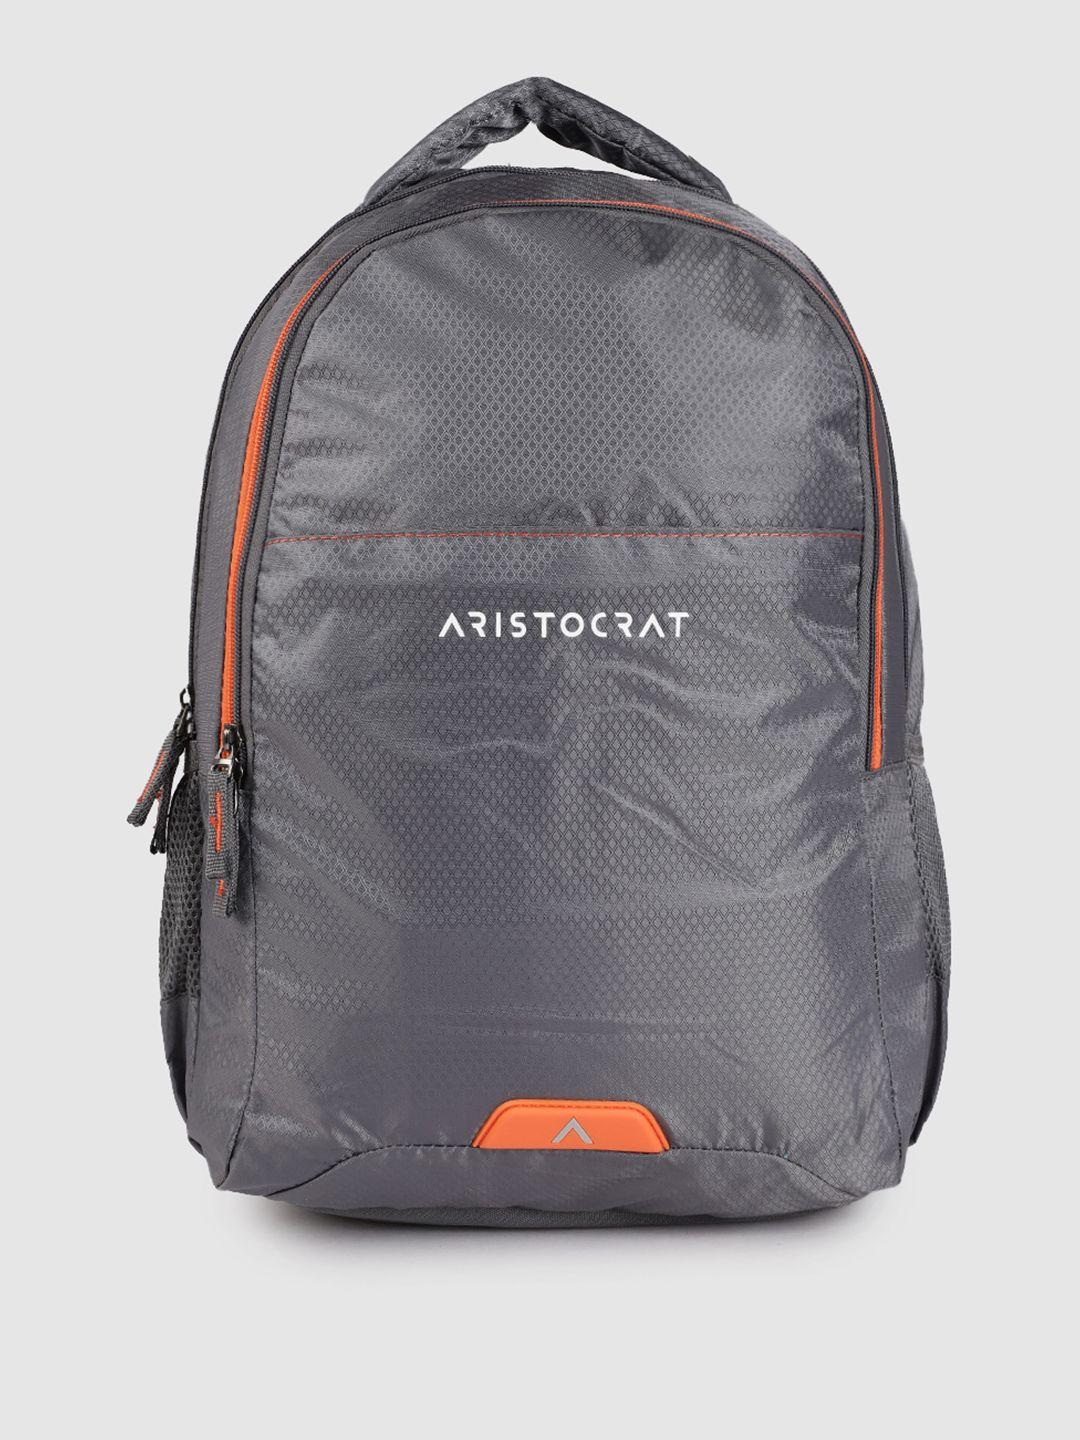 aristocrat unisex grey backpack